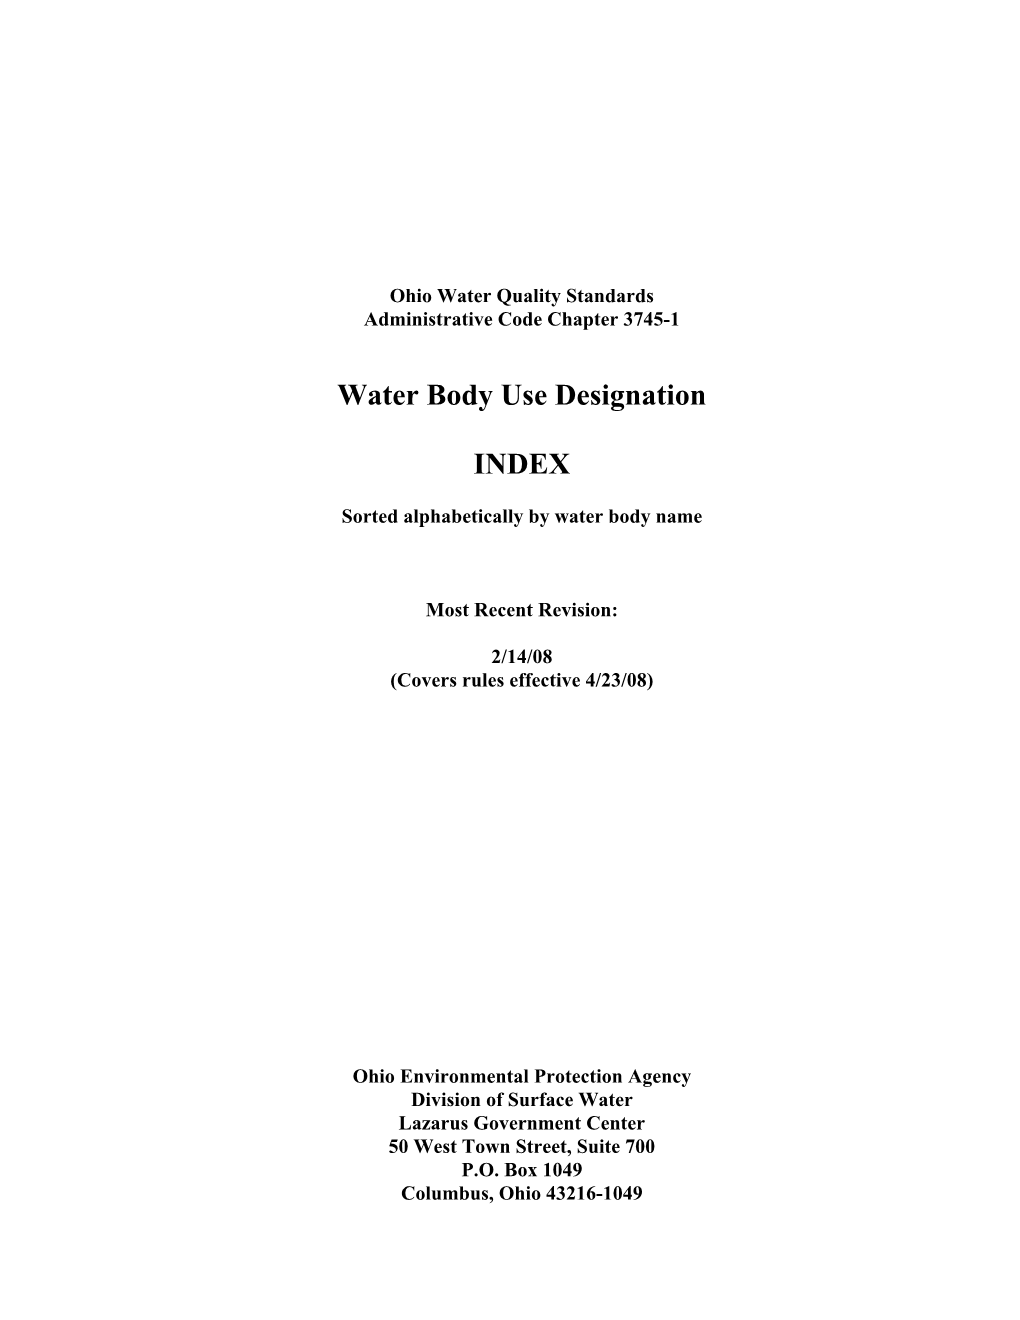 Water Body Use Designation INDEX